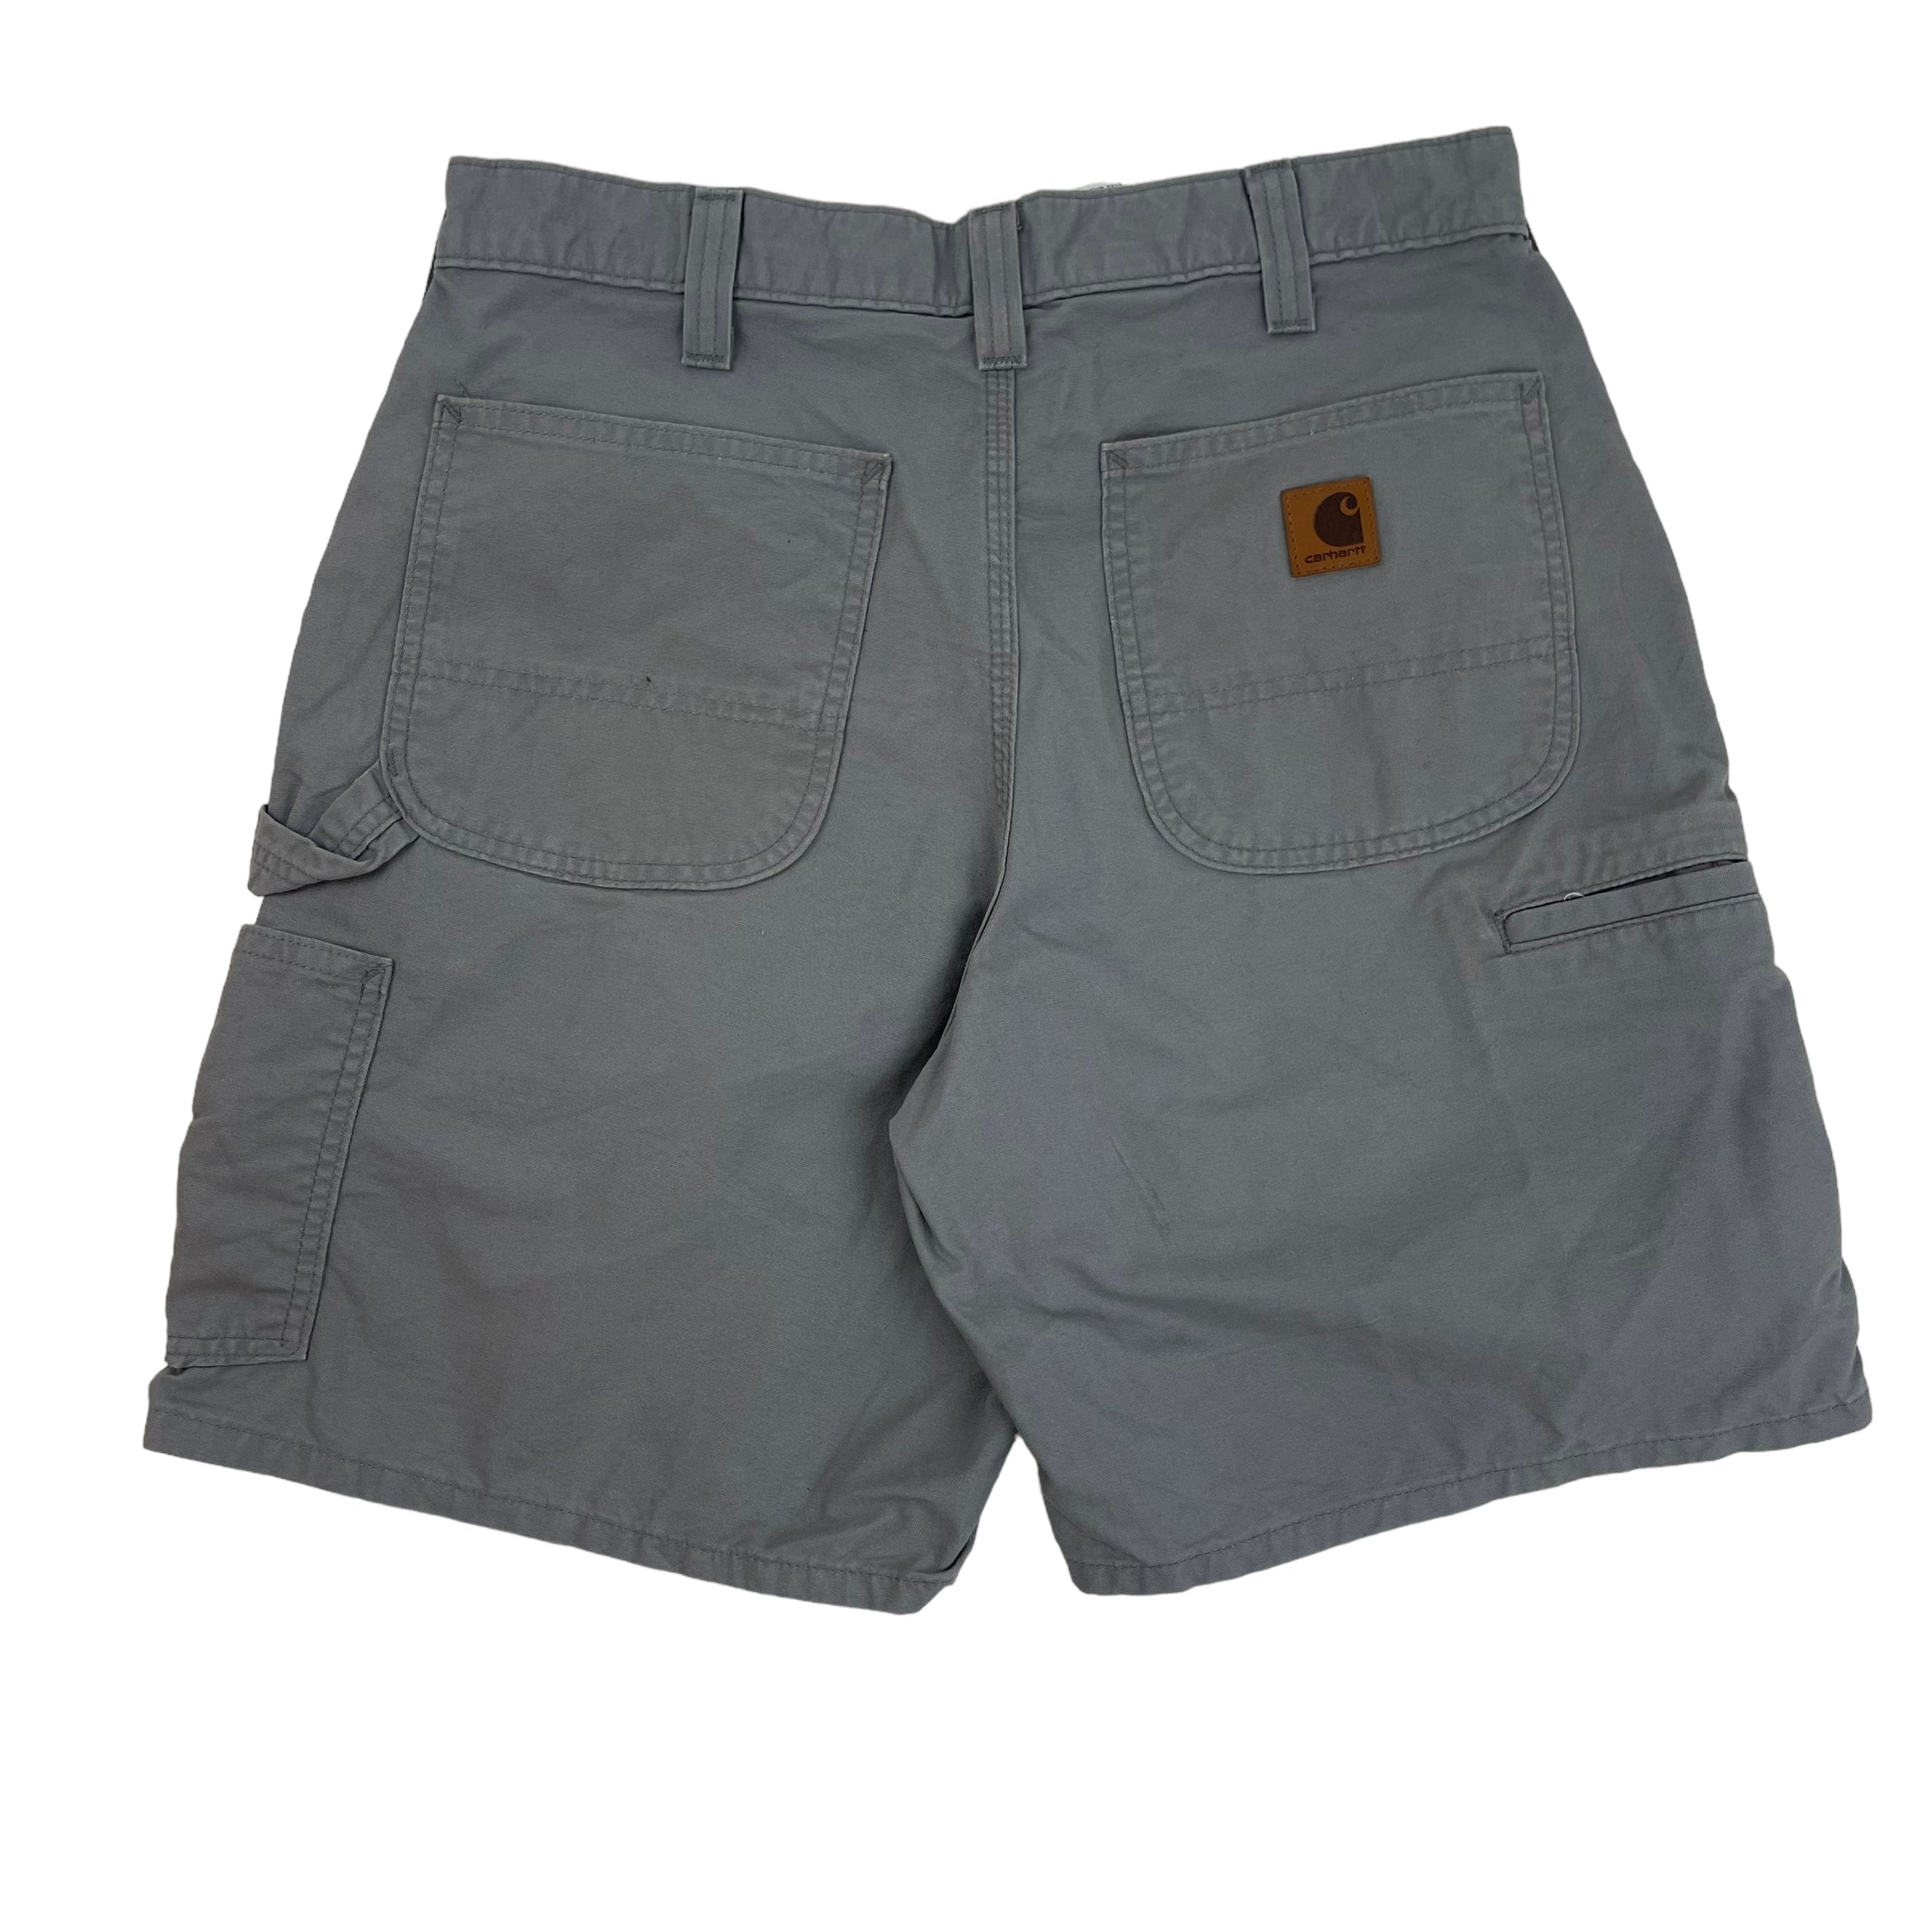 Vintage Carhartt Shorts Grey